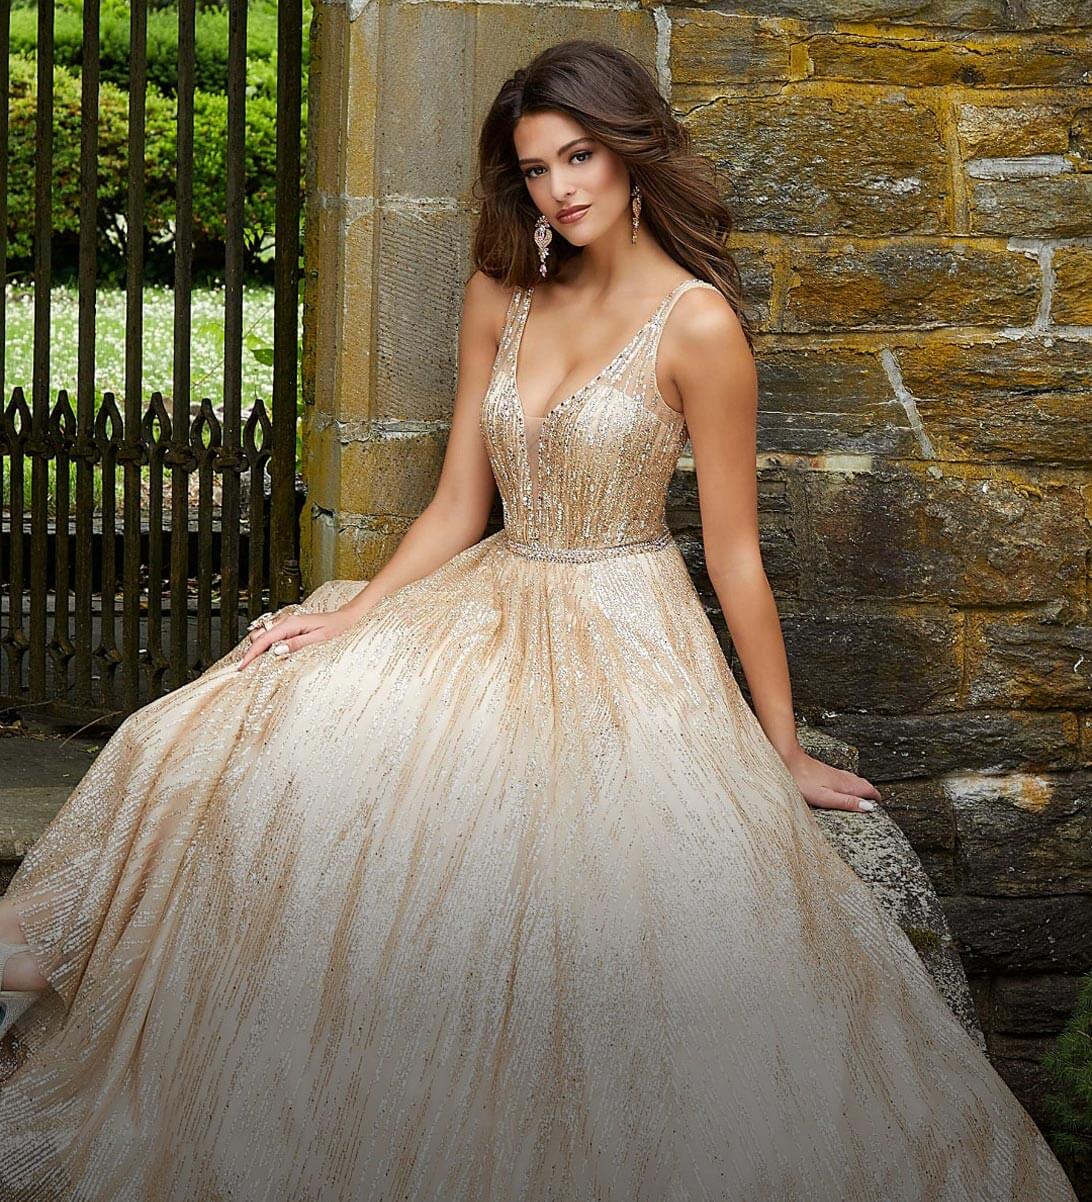 Model wearing a golden prom dress